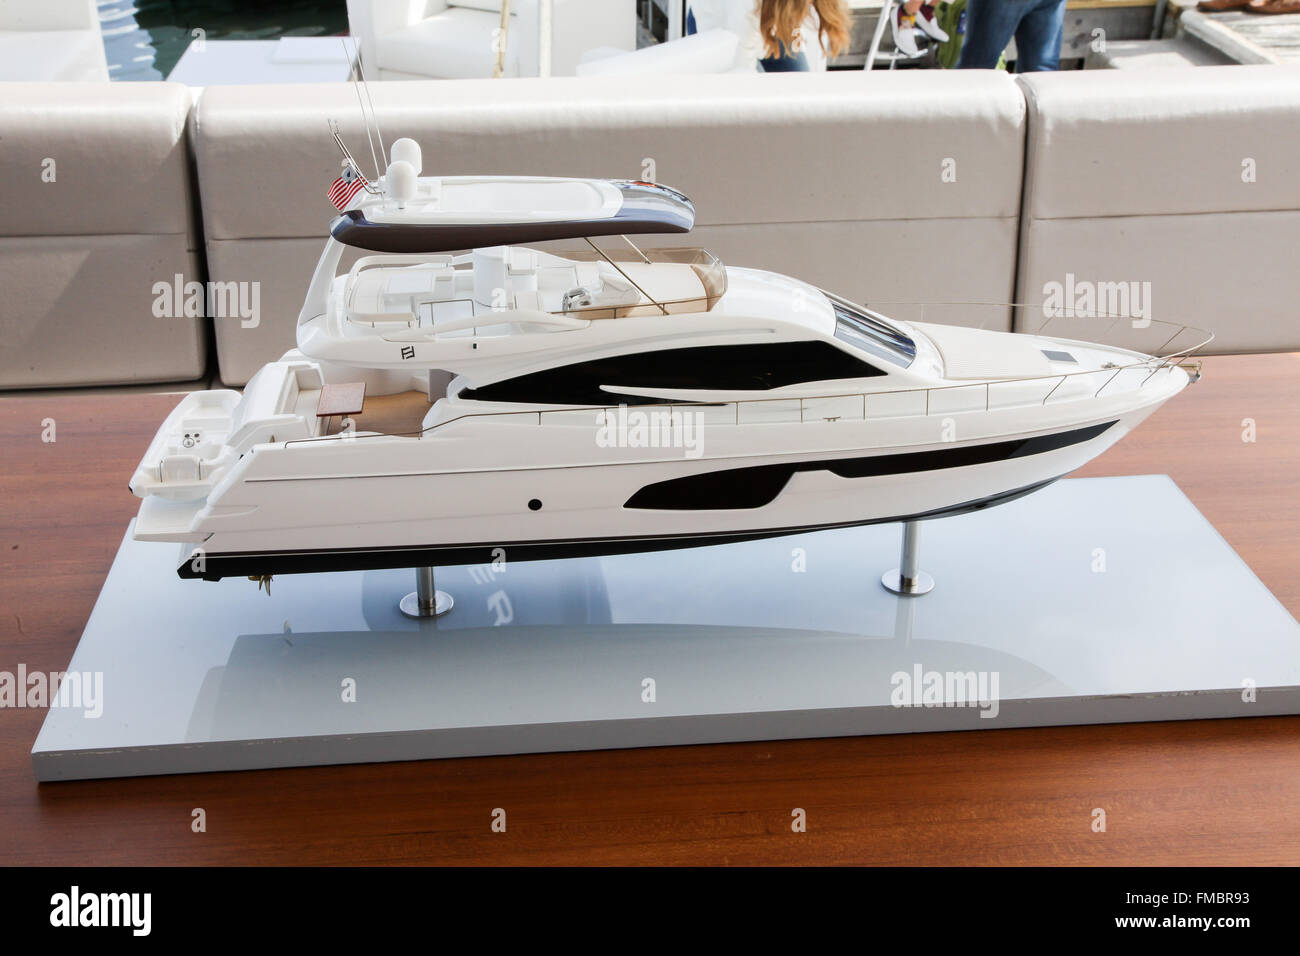 Ferretti yacht 690 model seen at Norwalk boat show. Stock Photo